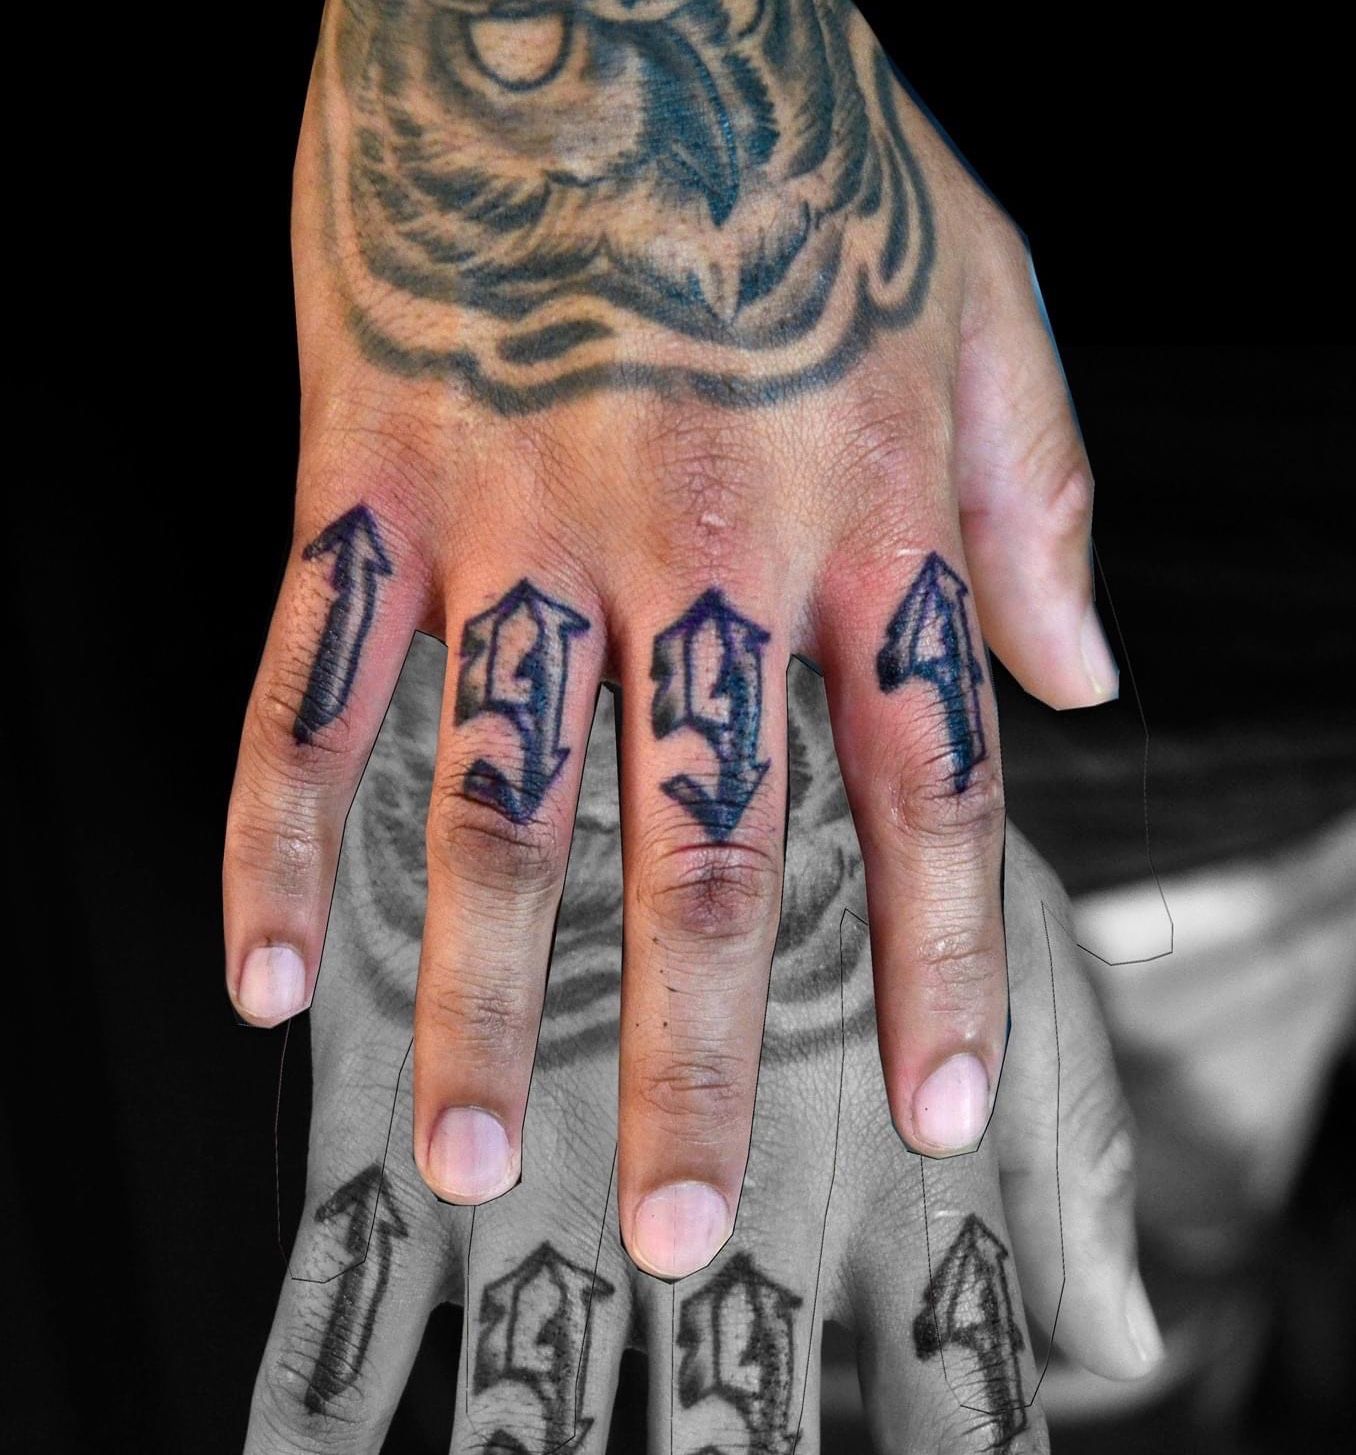 Gordo723 | Tattoo Artist